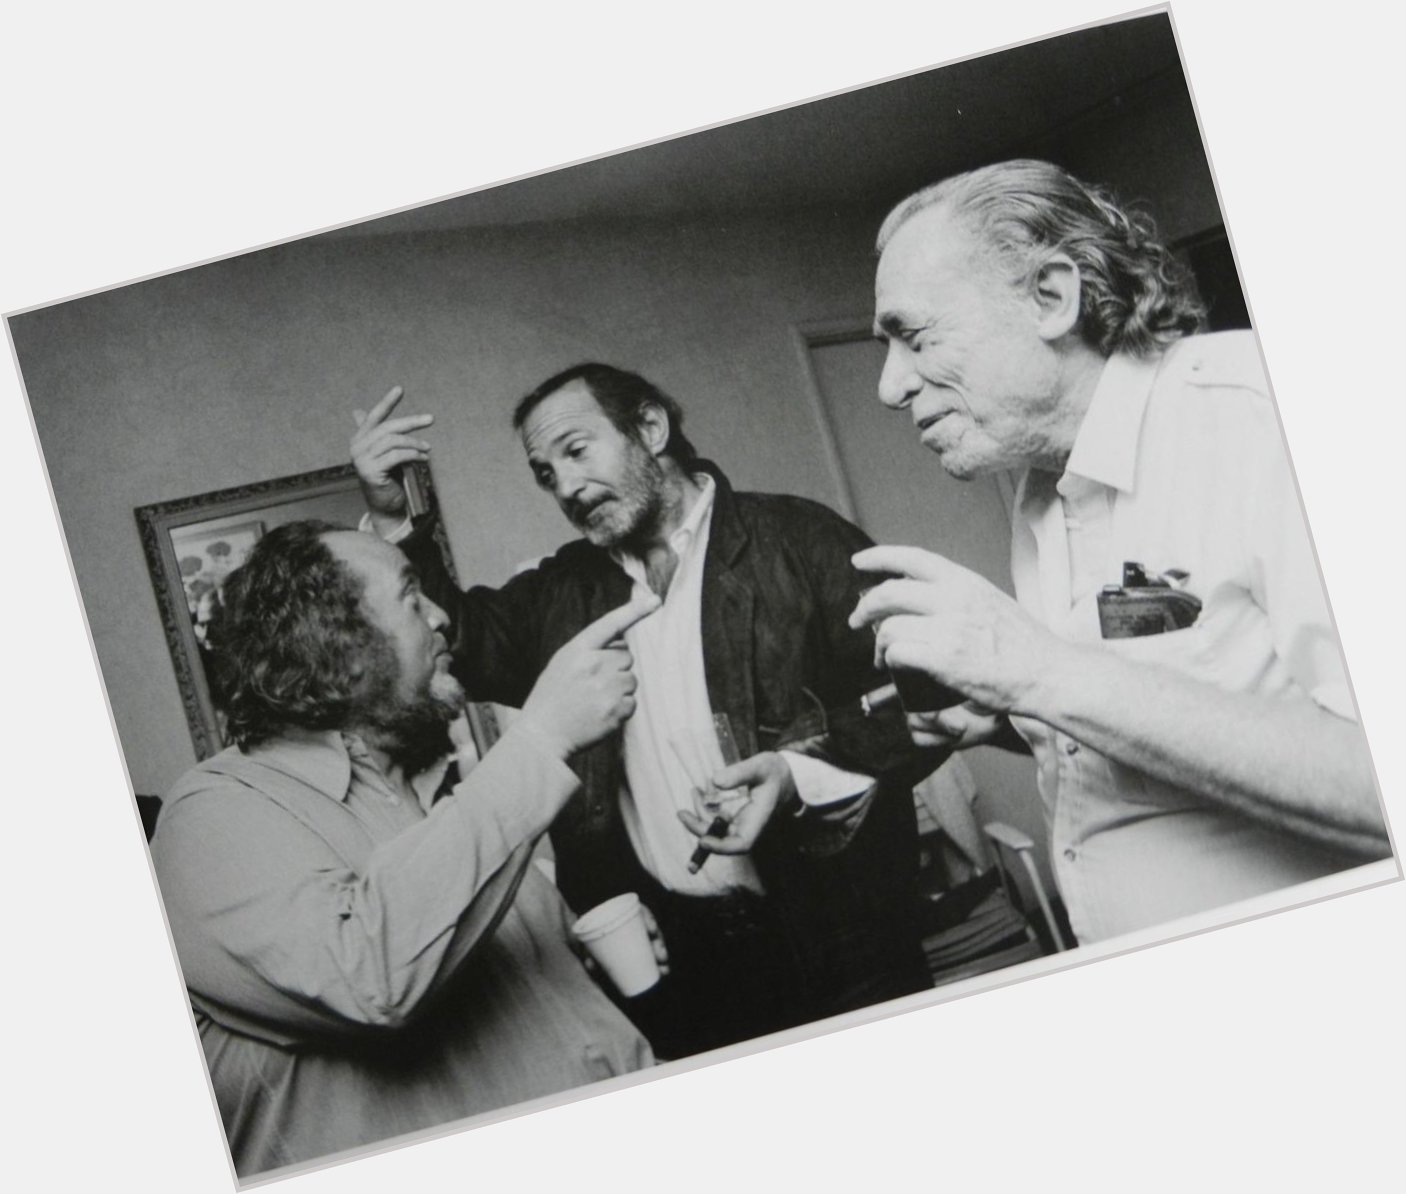 Happy birthday Ben Gazzara! With Marco Ferreri & Charles Bukowski, Tales of Ordinary Madness:   